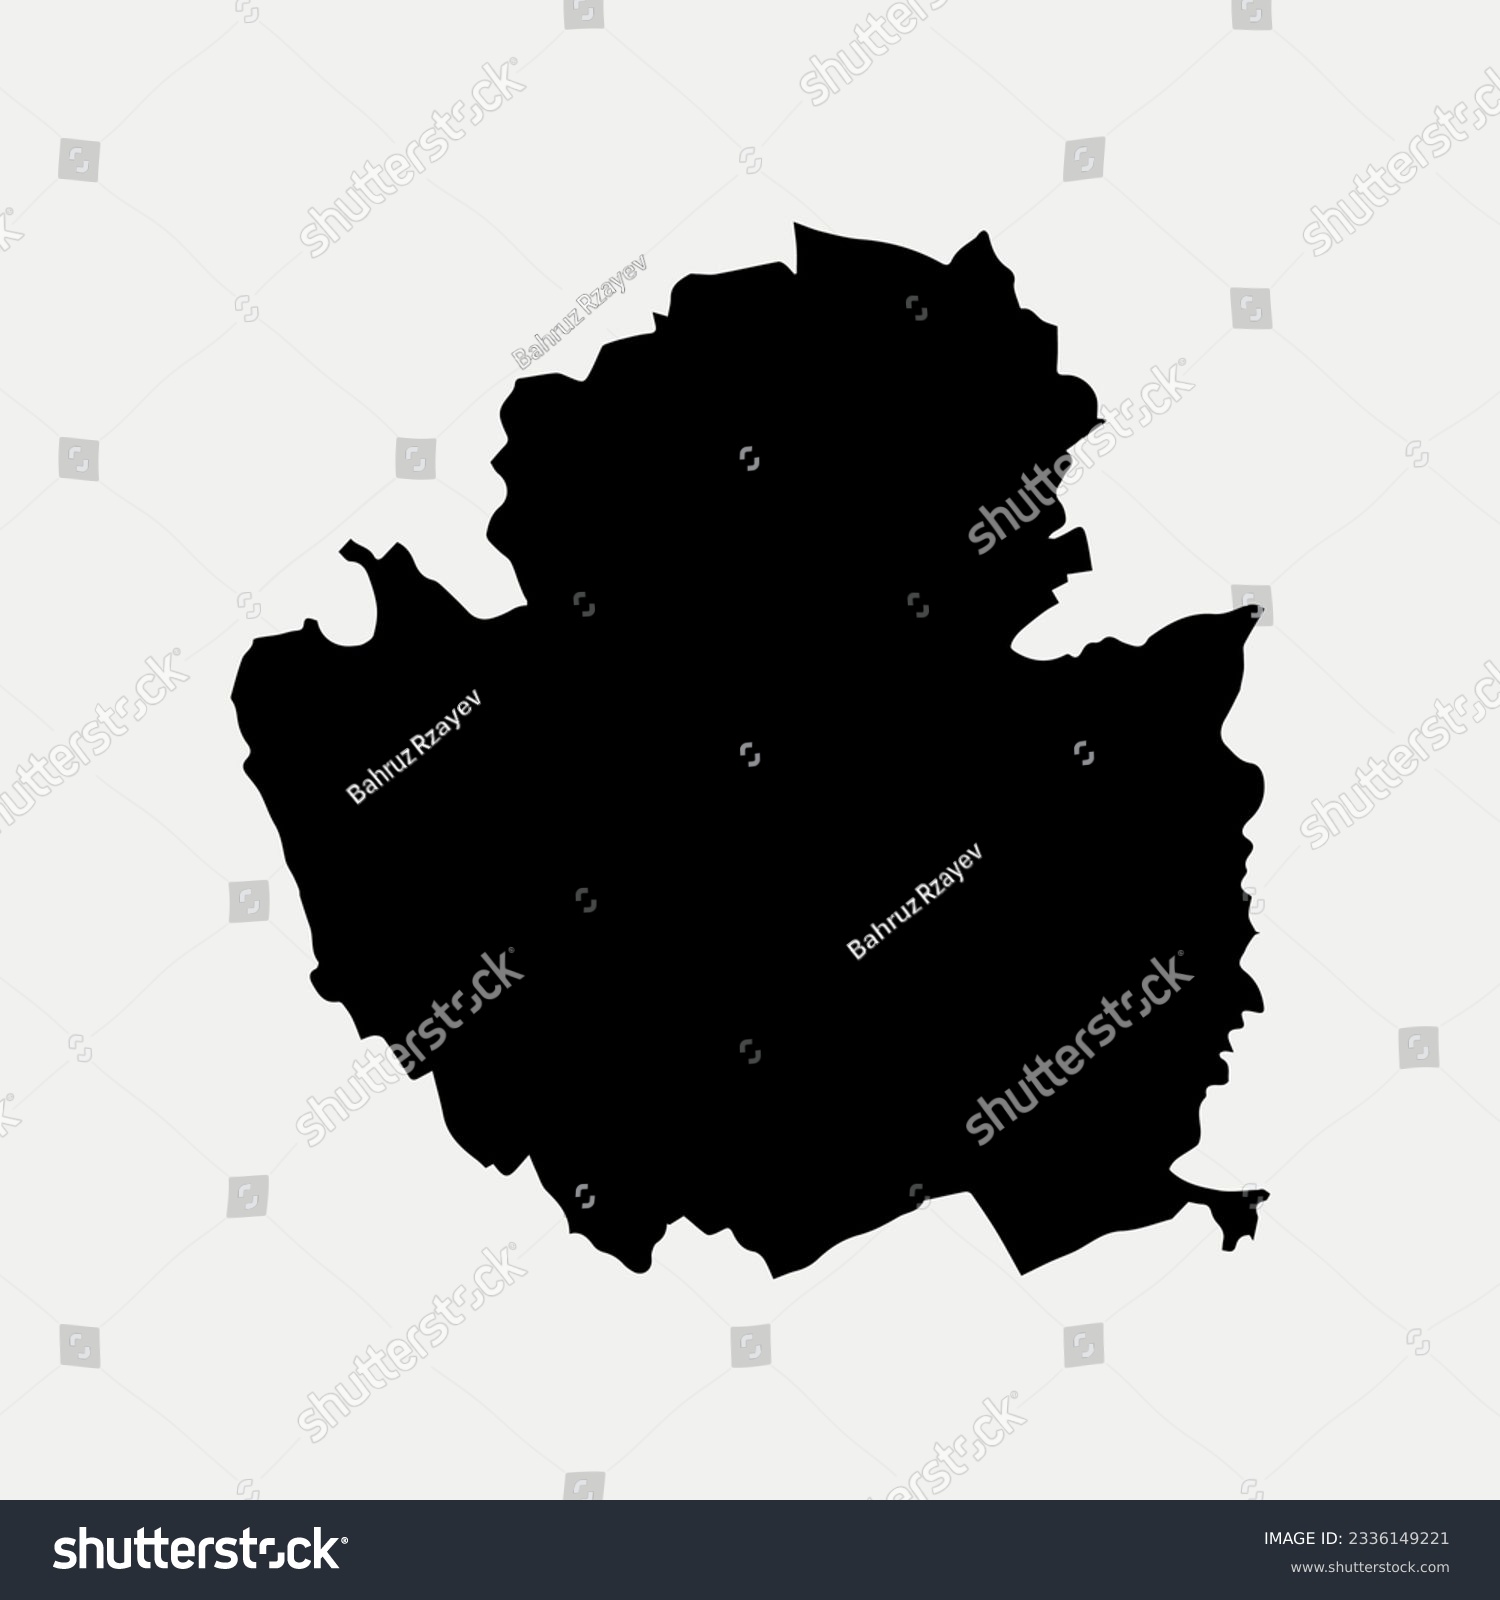 SVG of Map of York - England - United Kingdom region outline silhouette graphic element Illustration template design
 svg